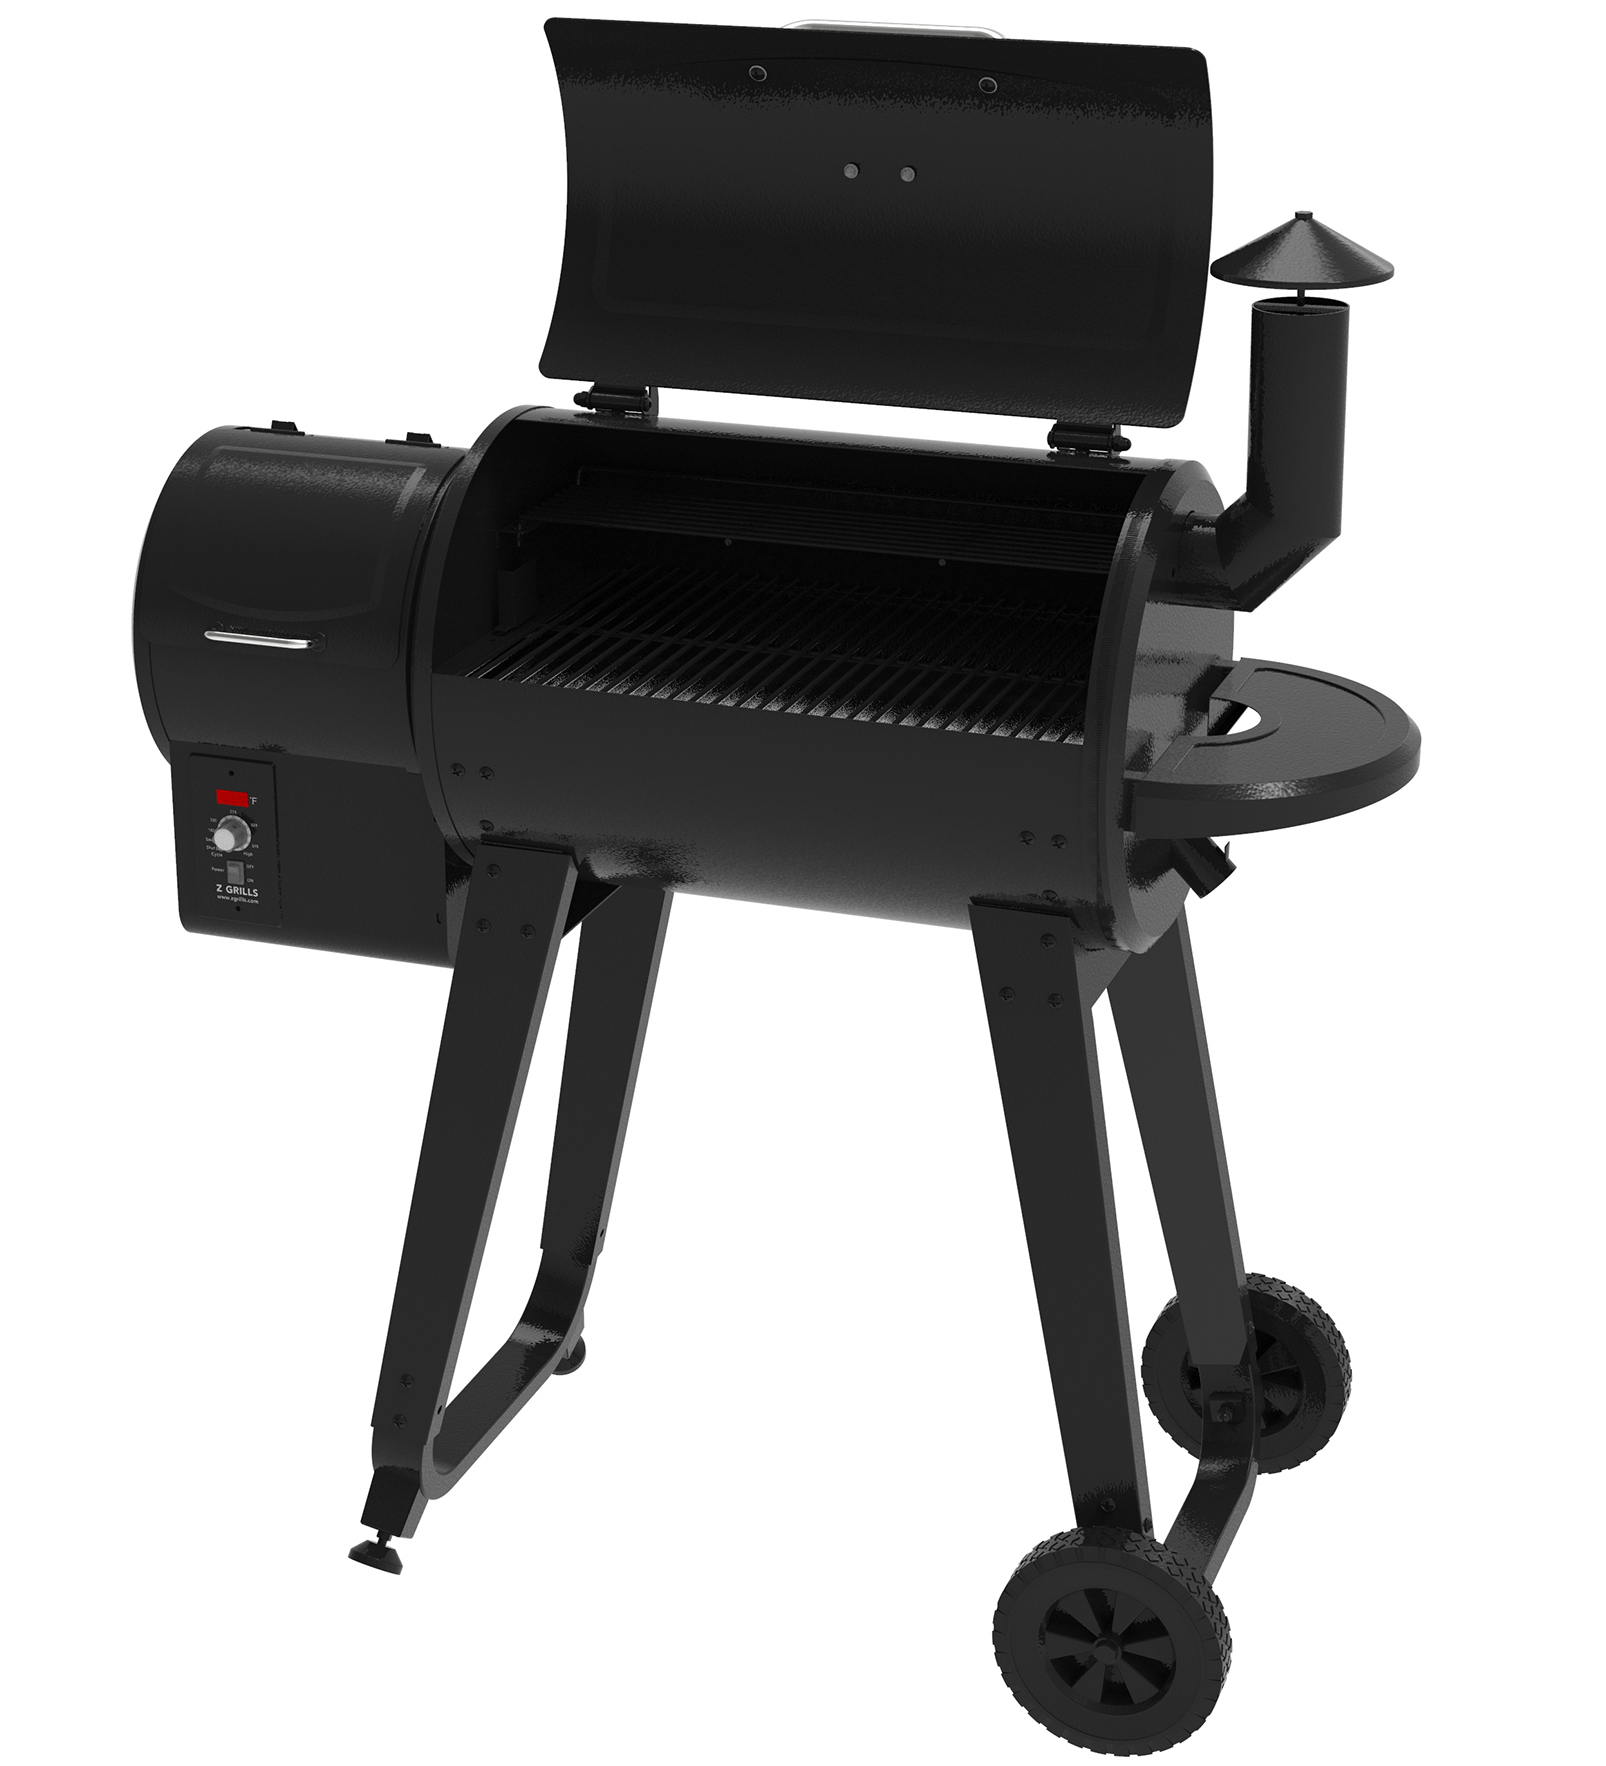 Z GRILLS ZPG-450A3 Wood Pellet Grill & Smoker 8-in-1 BBQ 2022 model, Black - image 3 of 11